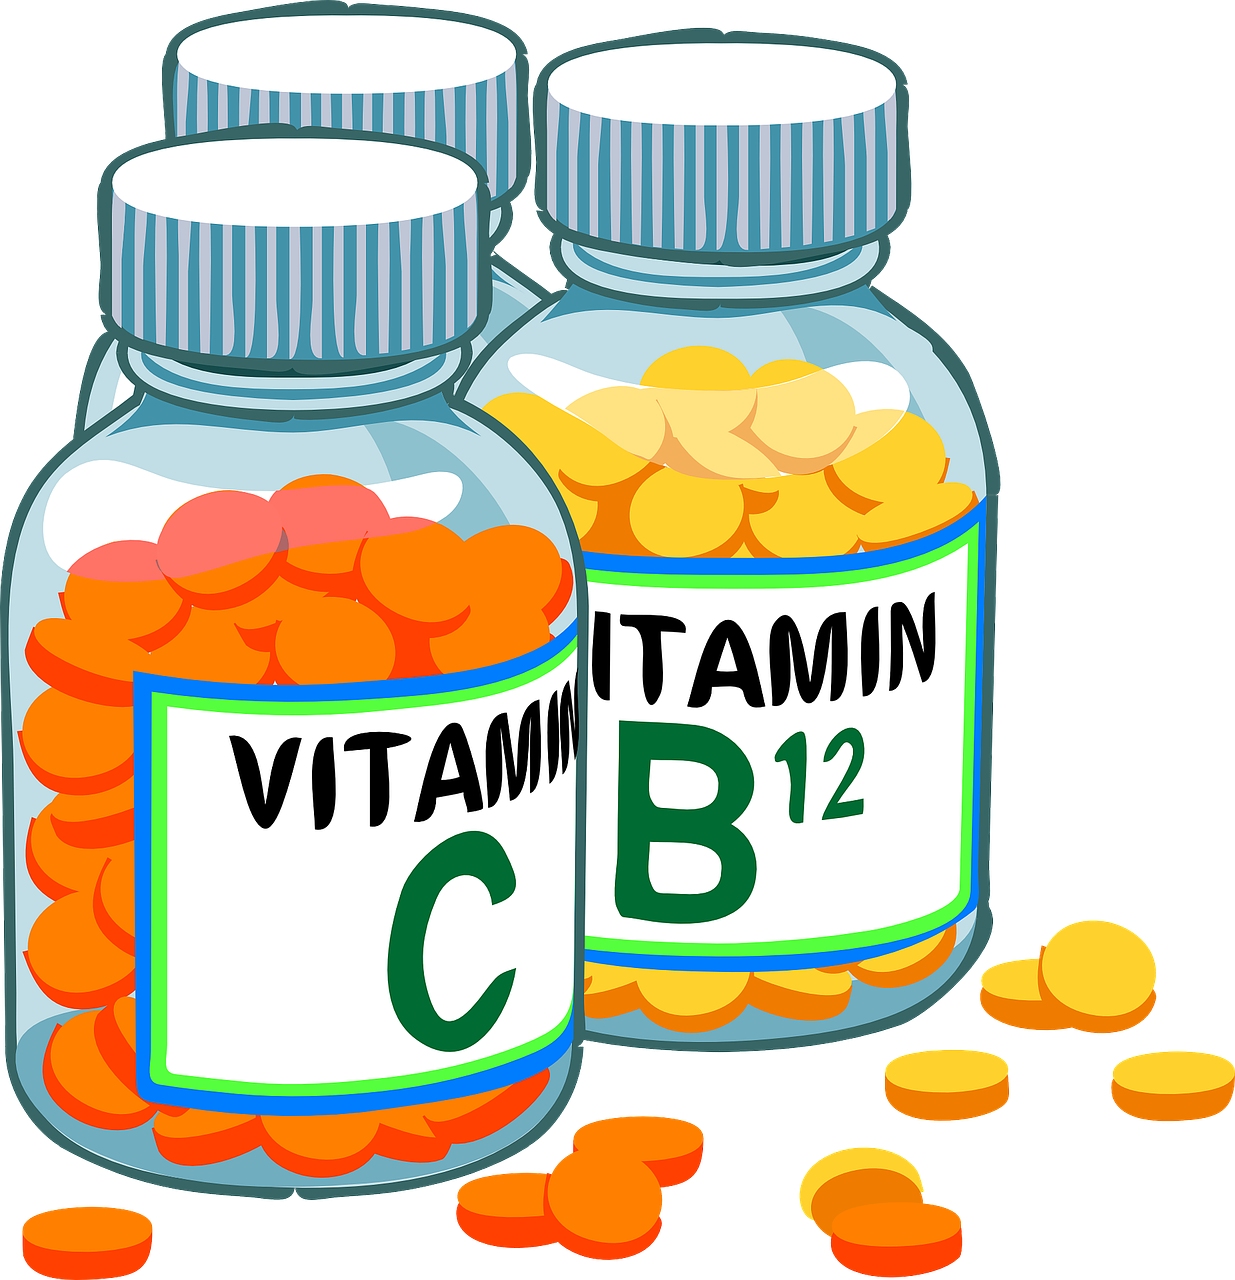 Vitamin B12 Vitamin C